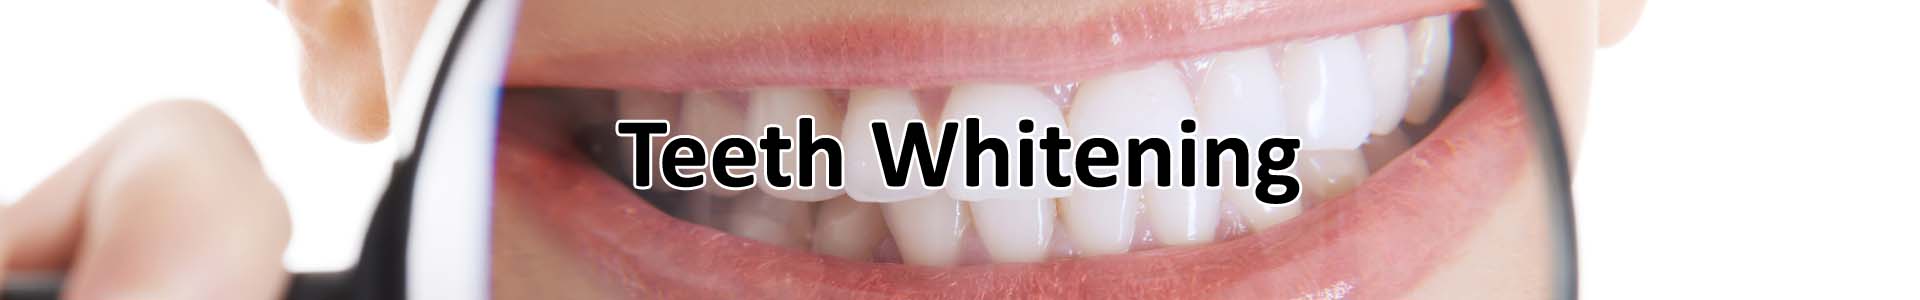 Teeth Whitening - Smiles by Rangel Visalia